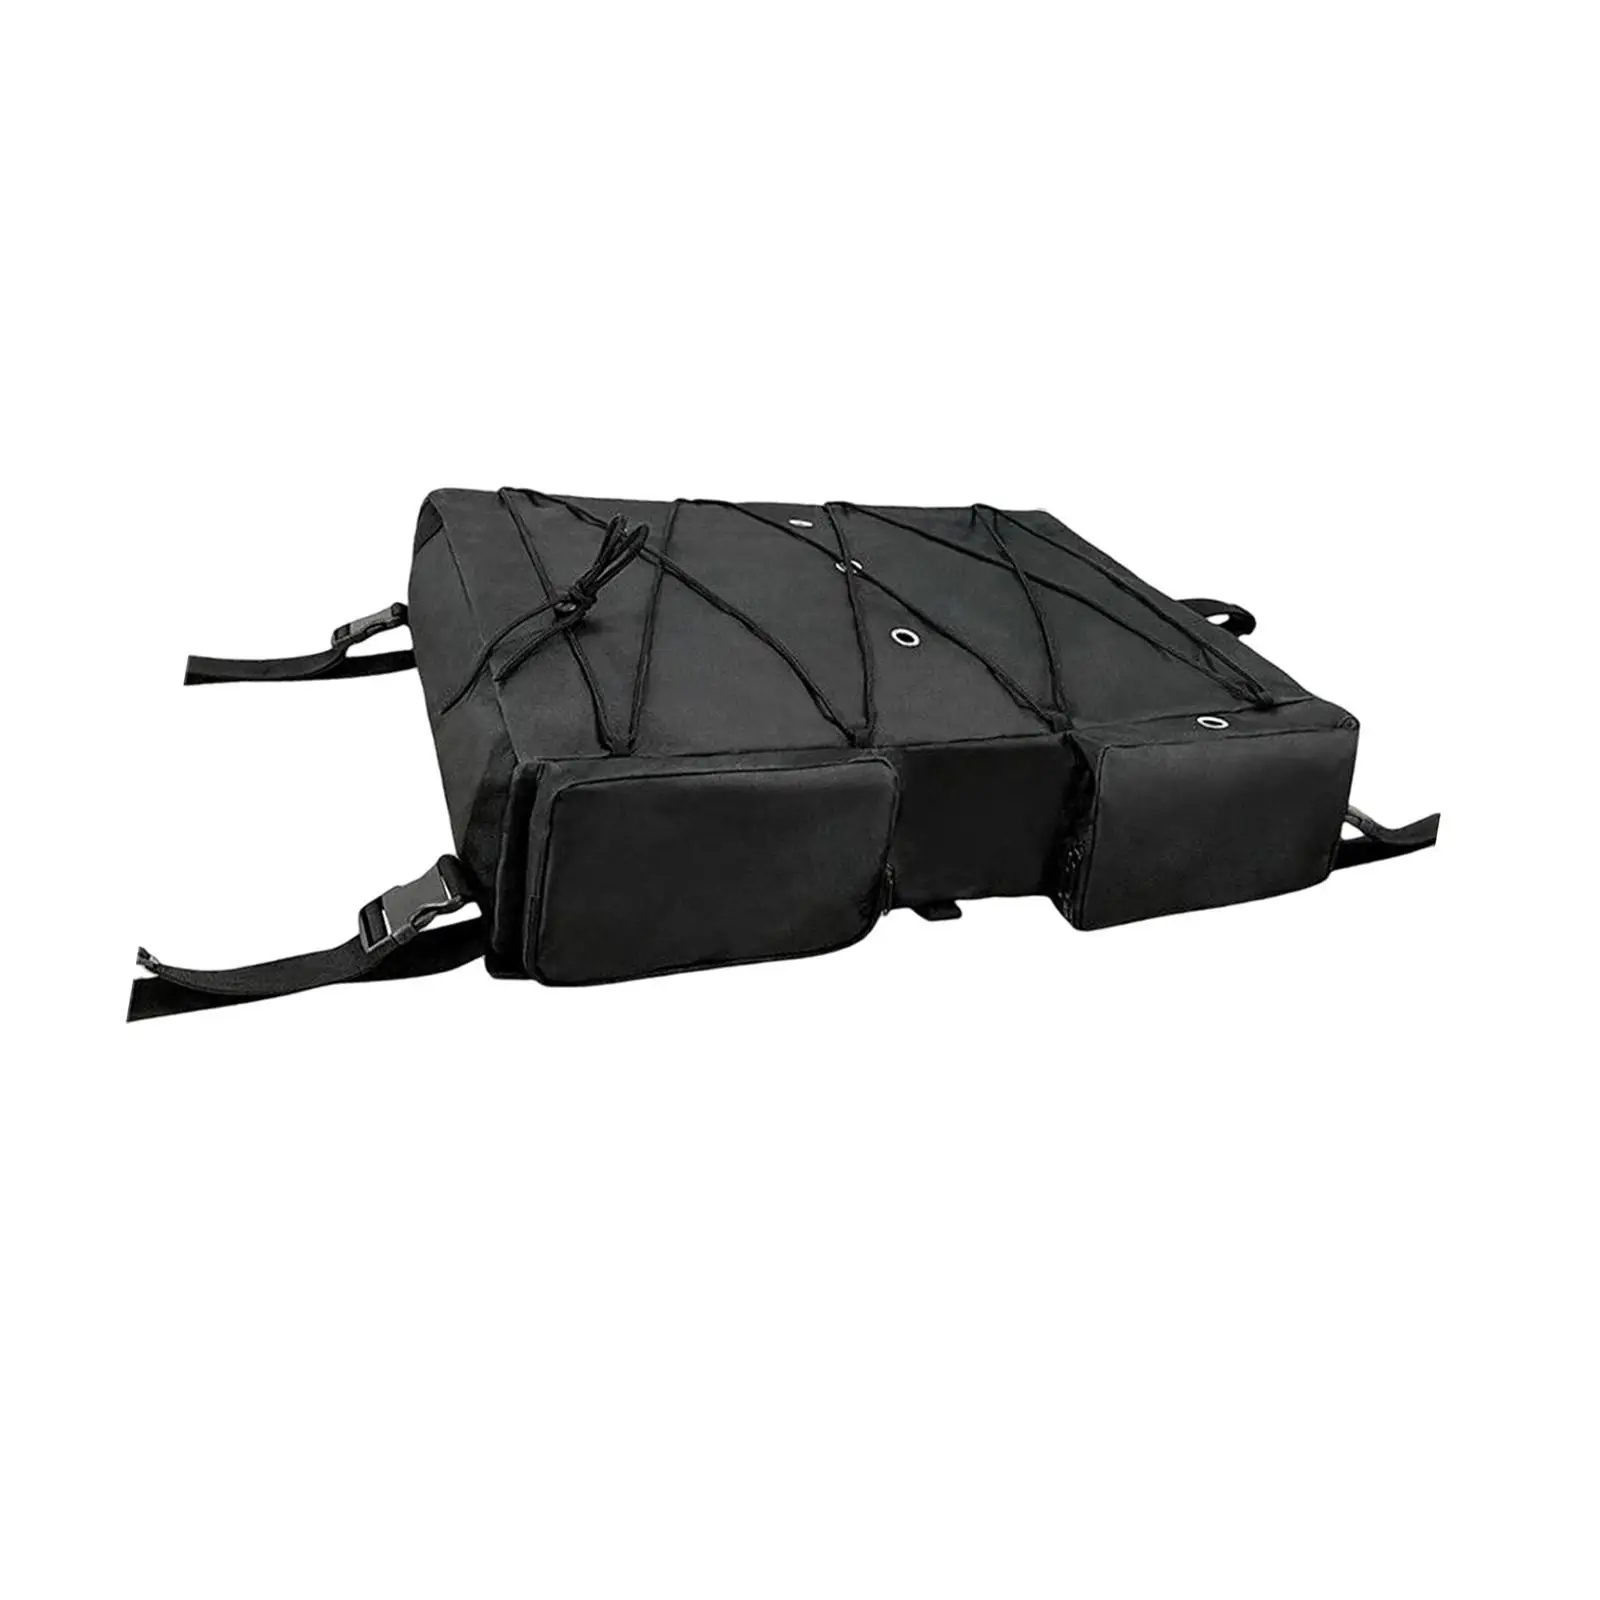 T Top Storage Bag Waterproof Life Vests Storage Bag for Outdoor Camping